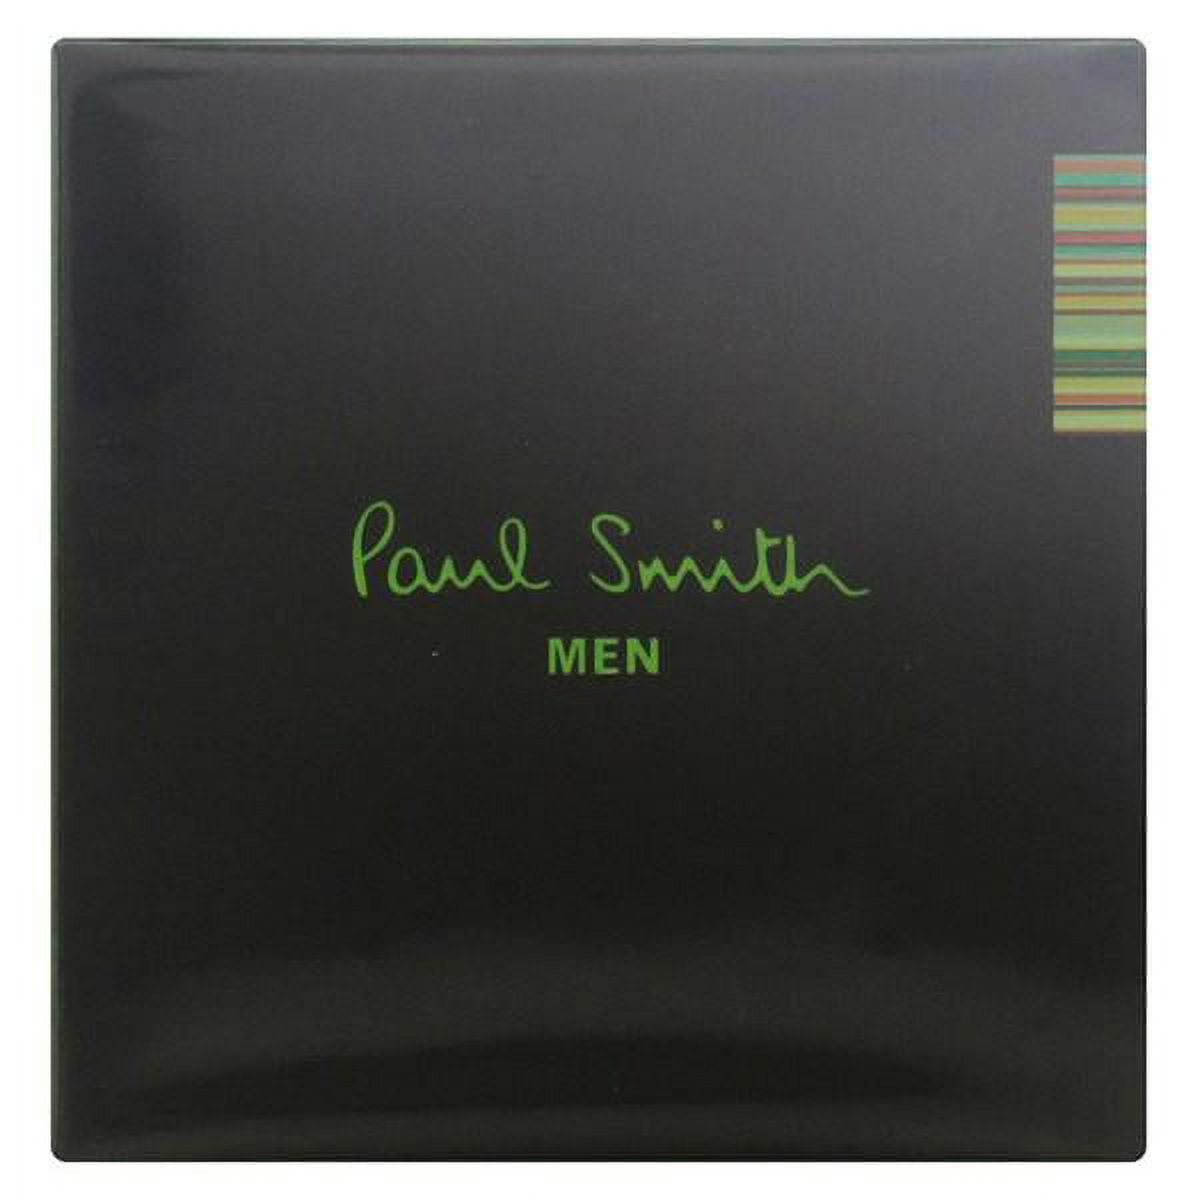 Paul Smith by Paul Smith for Men 1.0 oz Eau de Toilette Spray - image 2 of 2